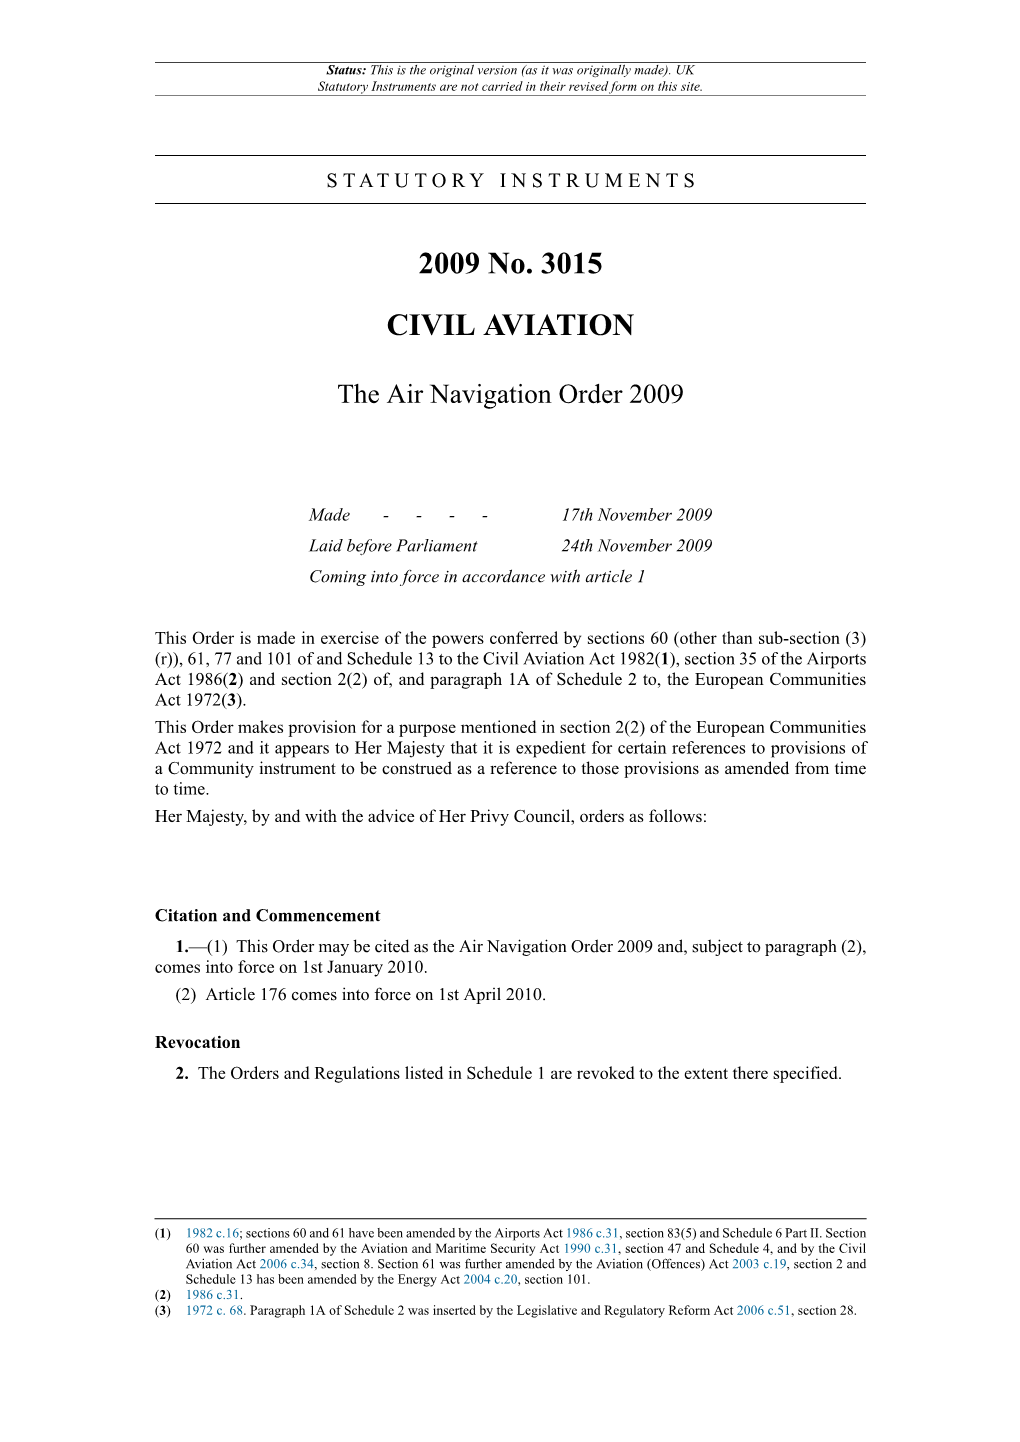 The Air Navigation Order 2009